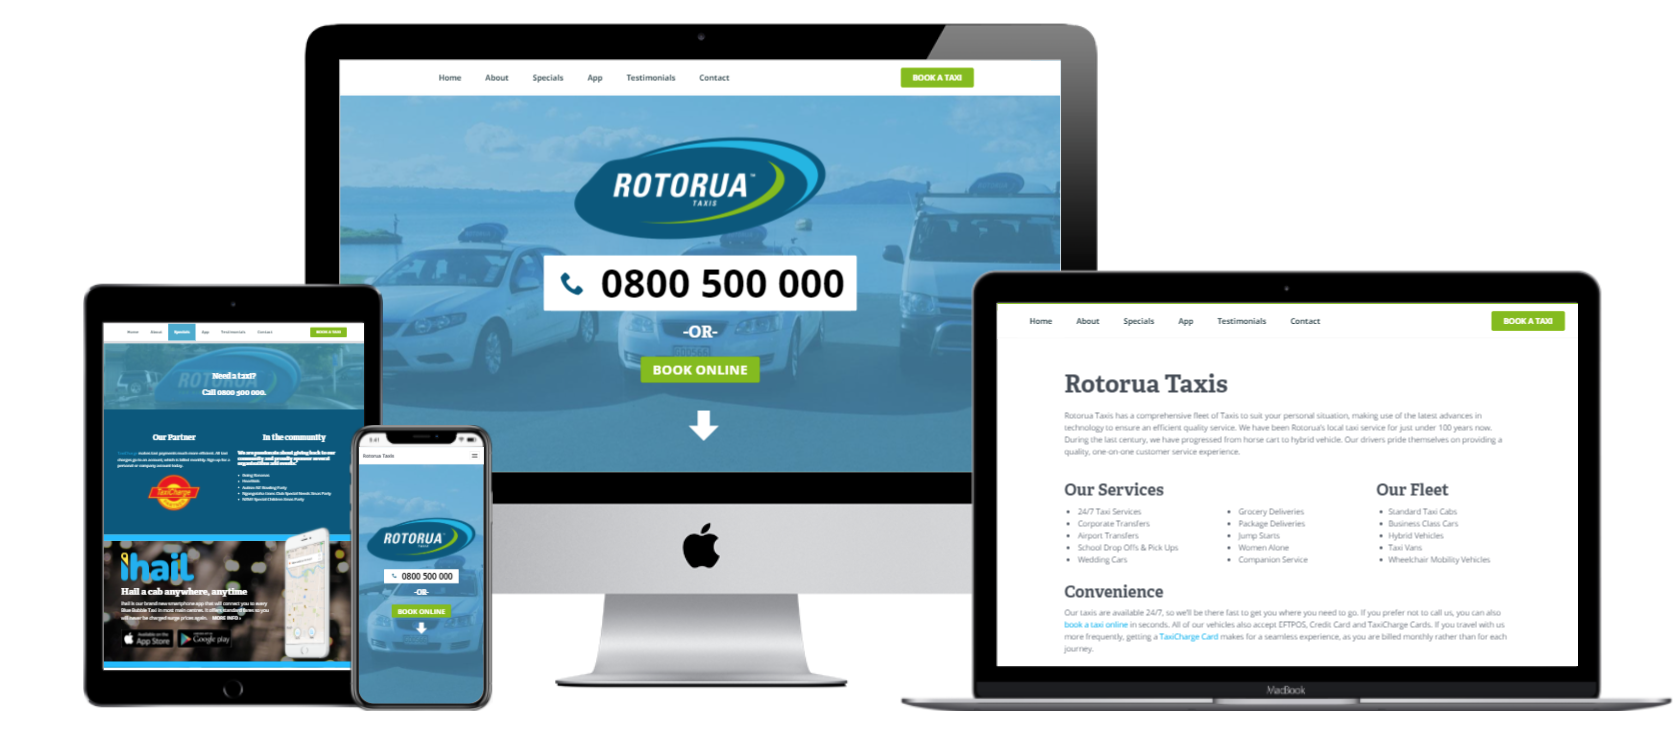 Rotorua Taxis